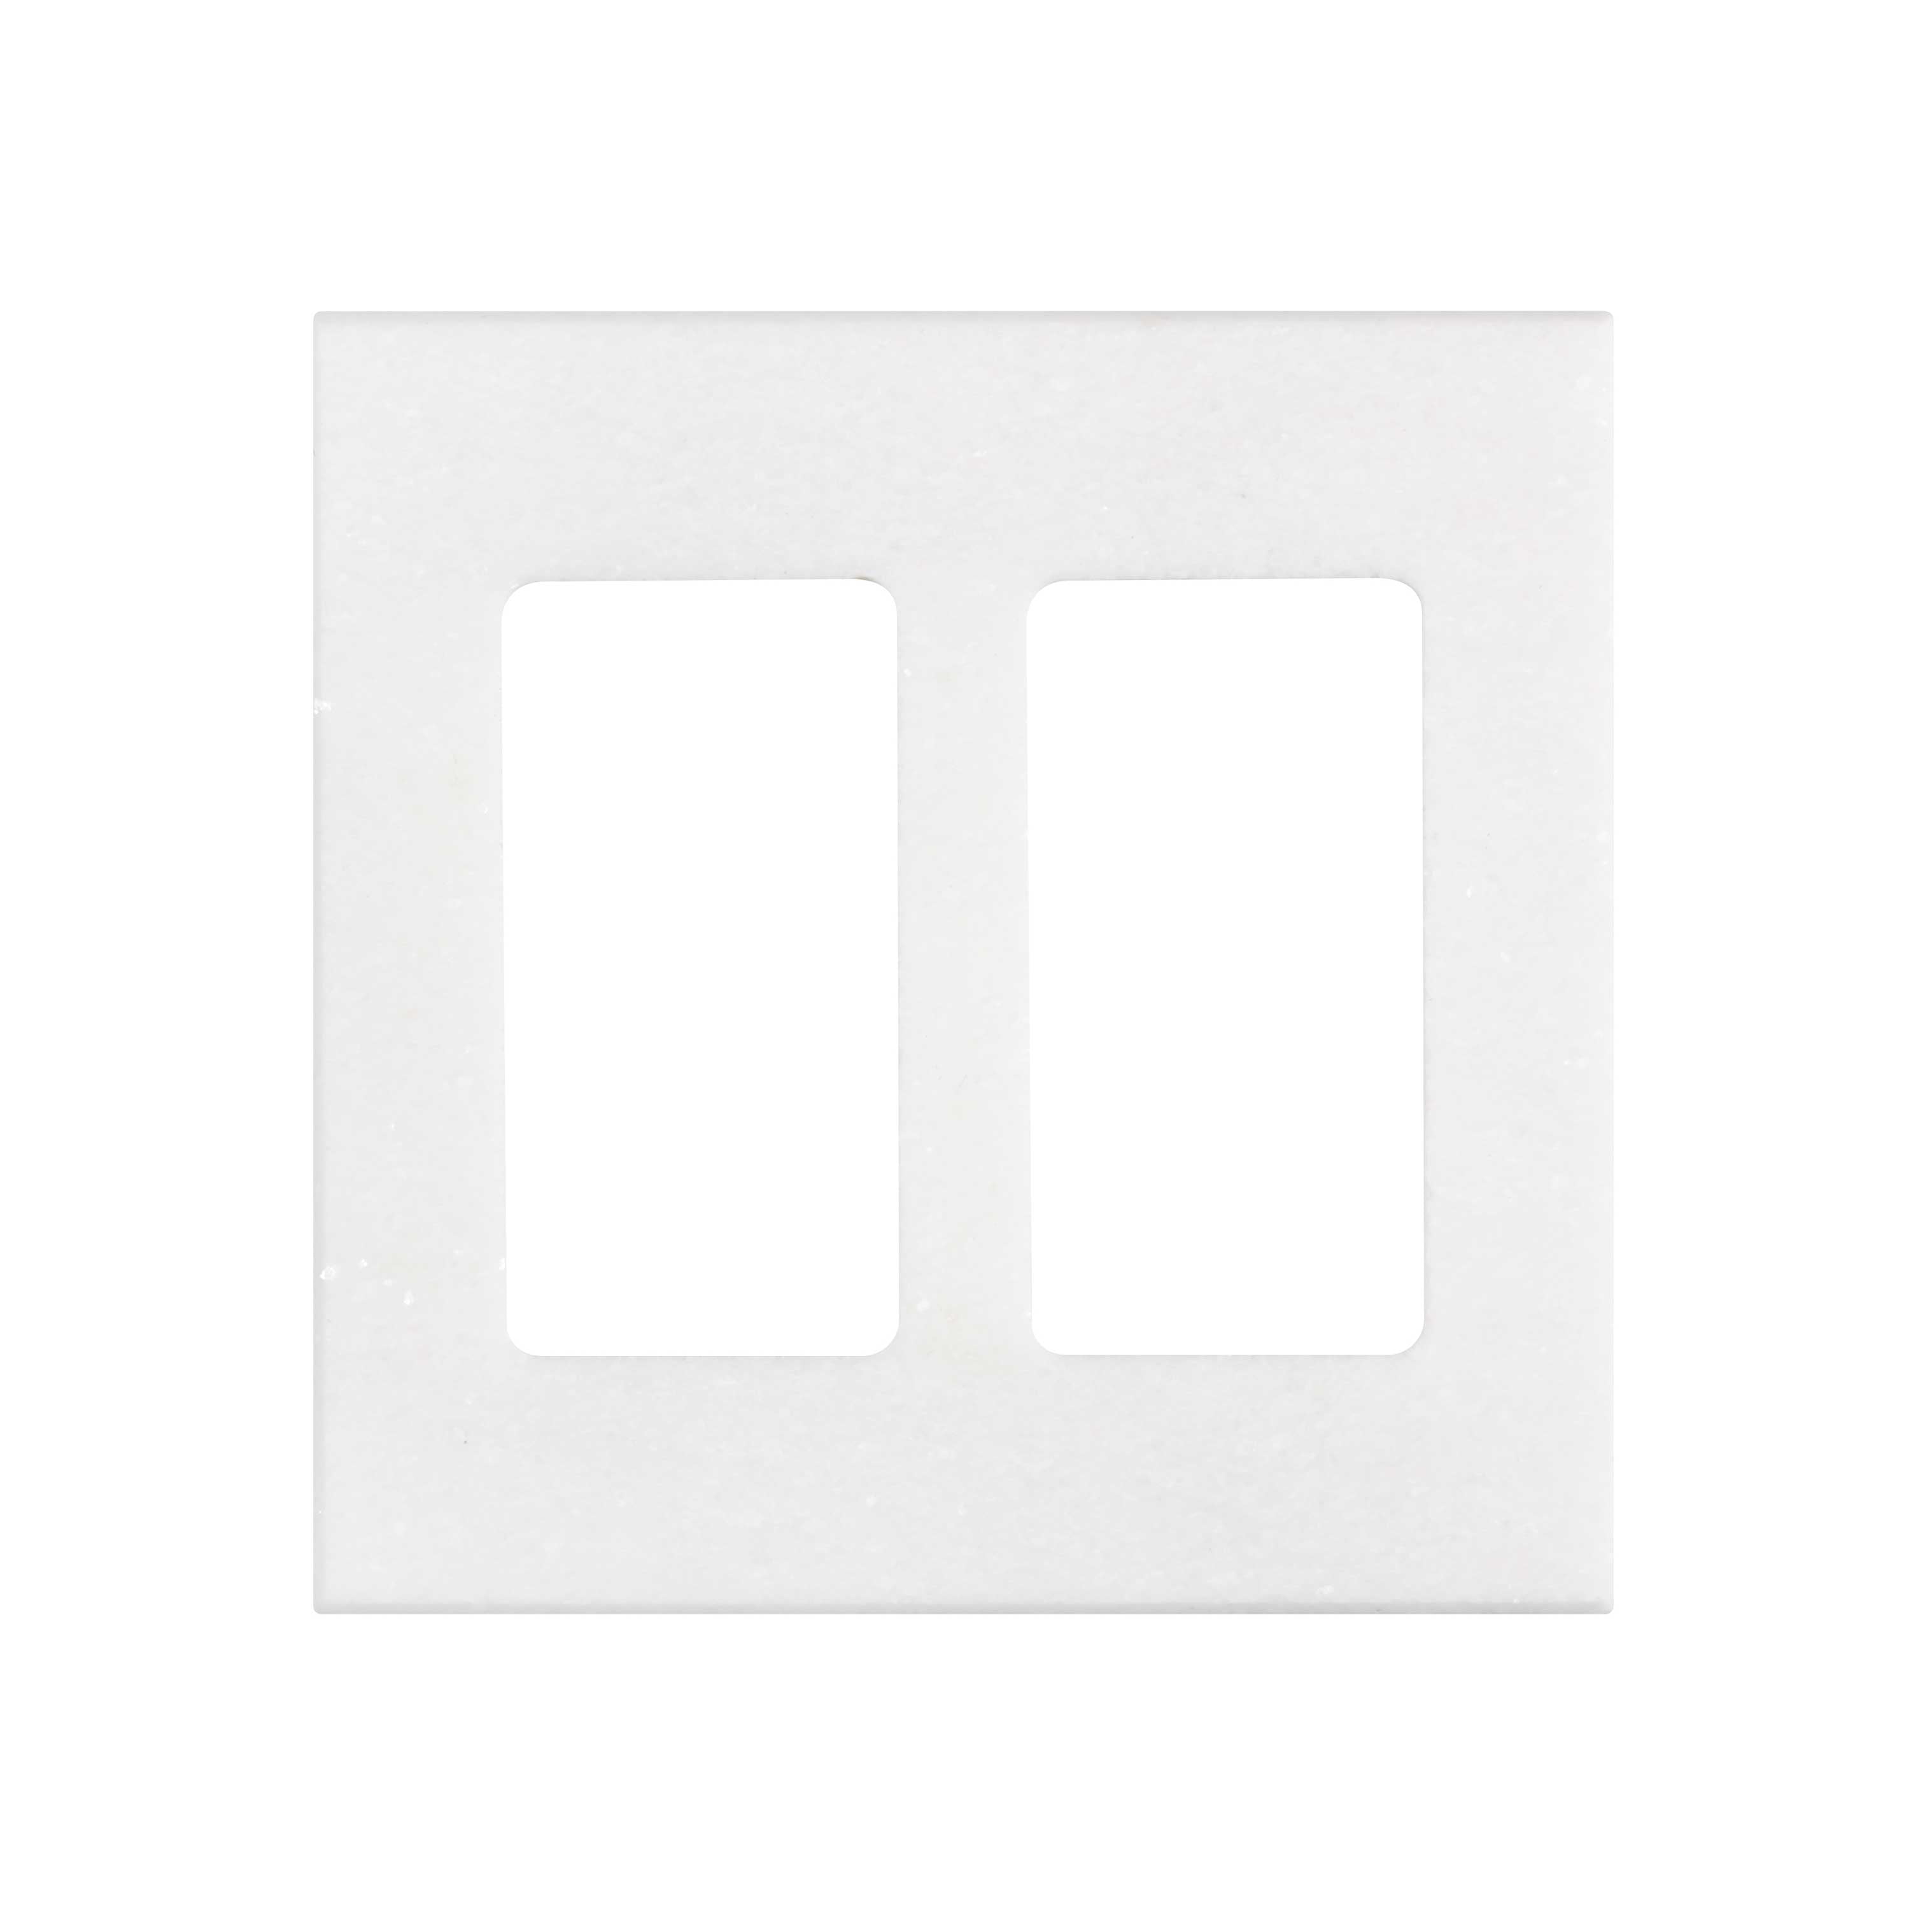 Thassos White (Greek)	Marble	2-ROCKER	4 1/2" X 4 1/2"